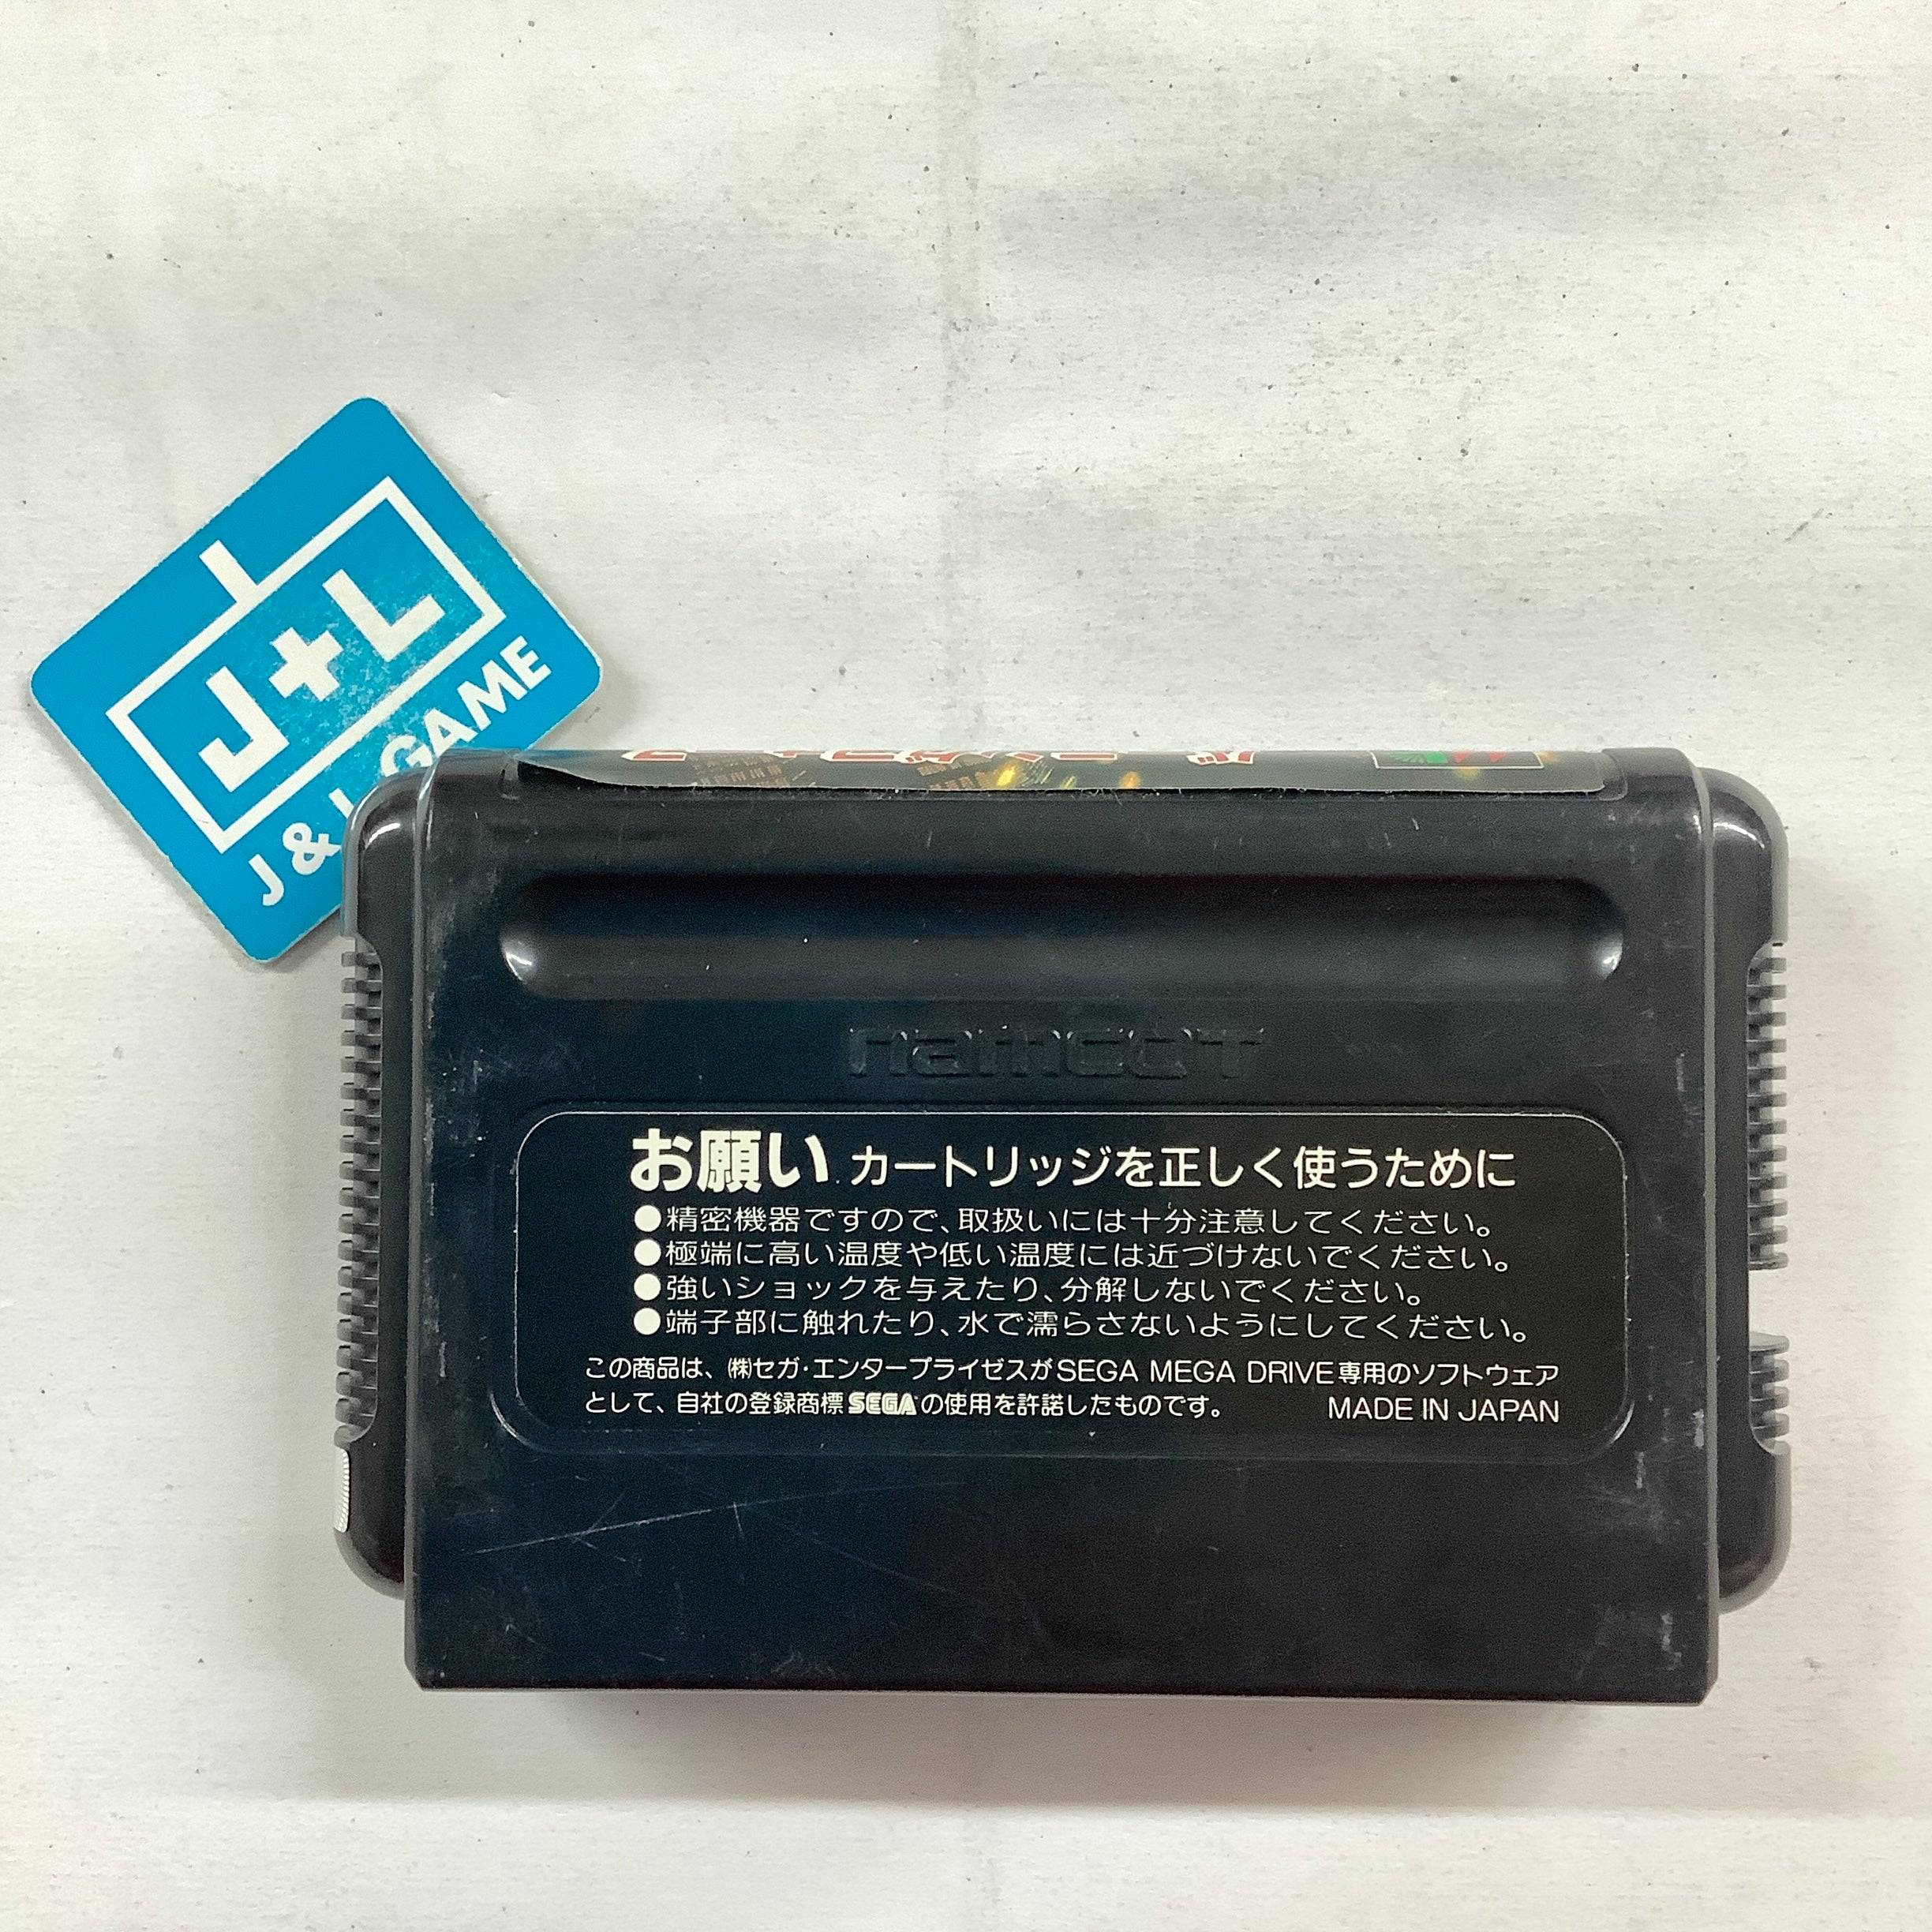 Burning Force - SEGA Mega Drive (Japanese Import) [Pre-Owned] Video Games Namco   